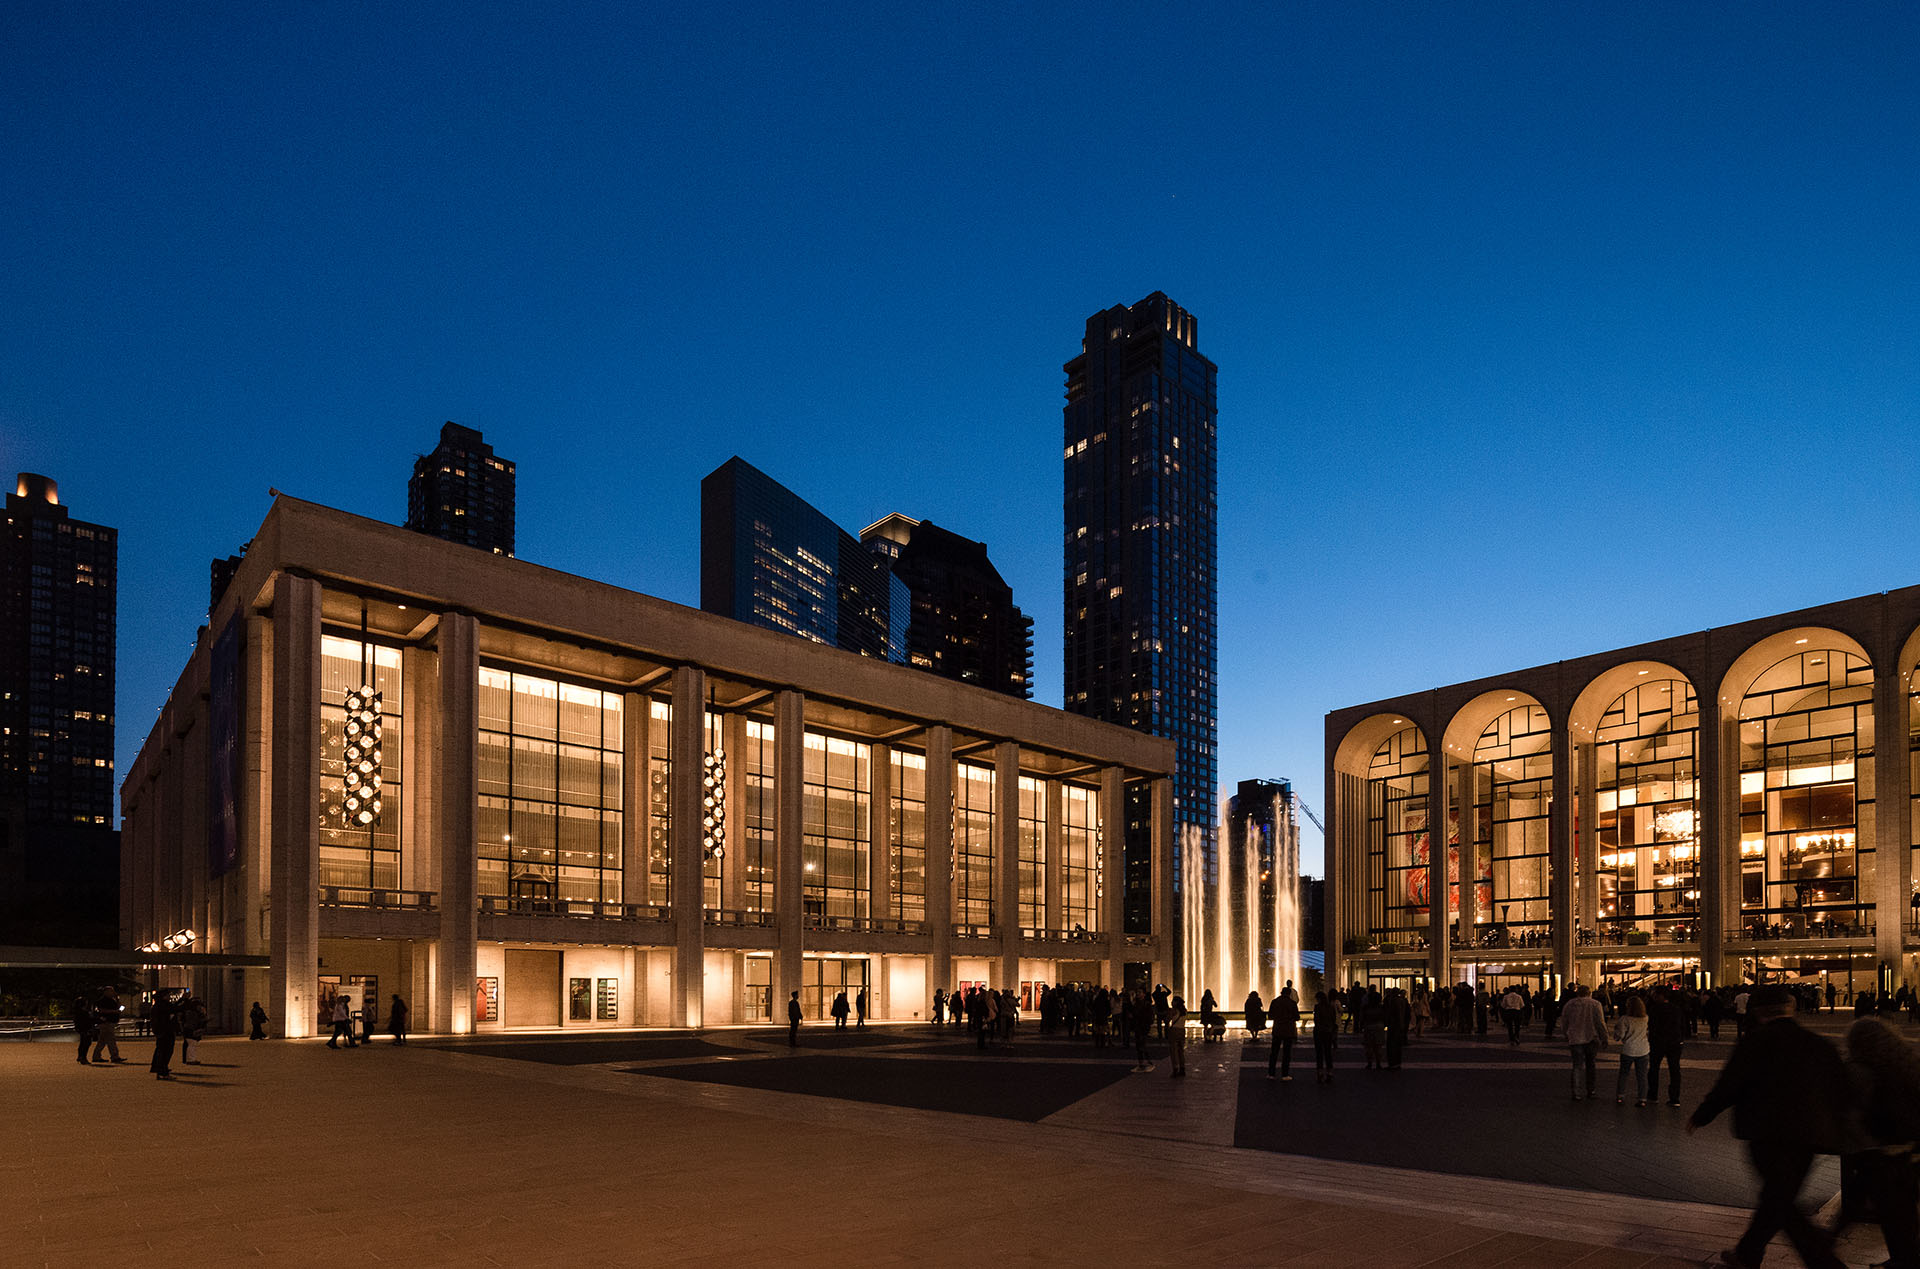 Lincoln Center, David H. Koch Theater
-New York, NY